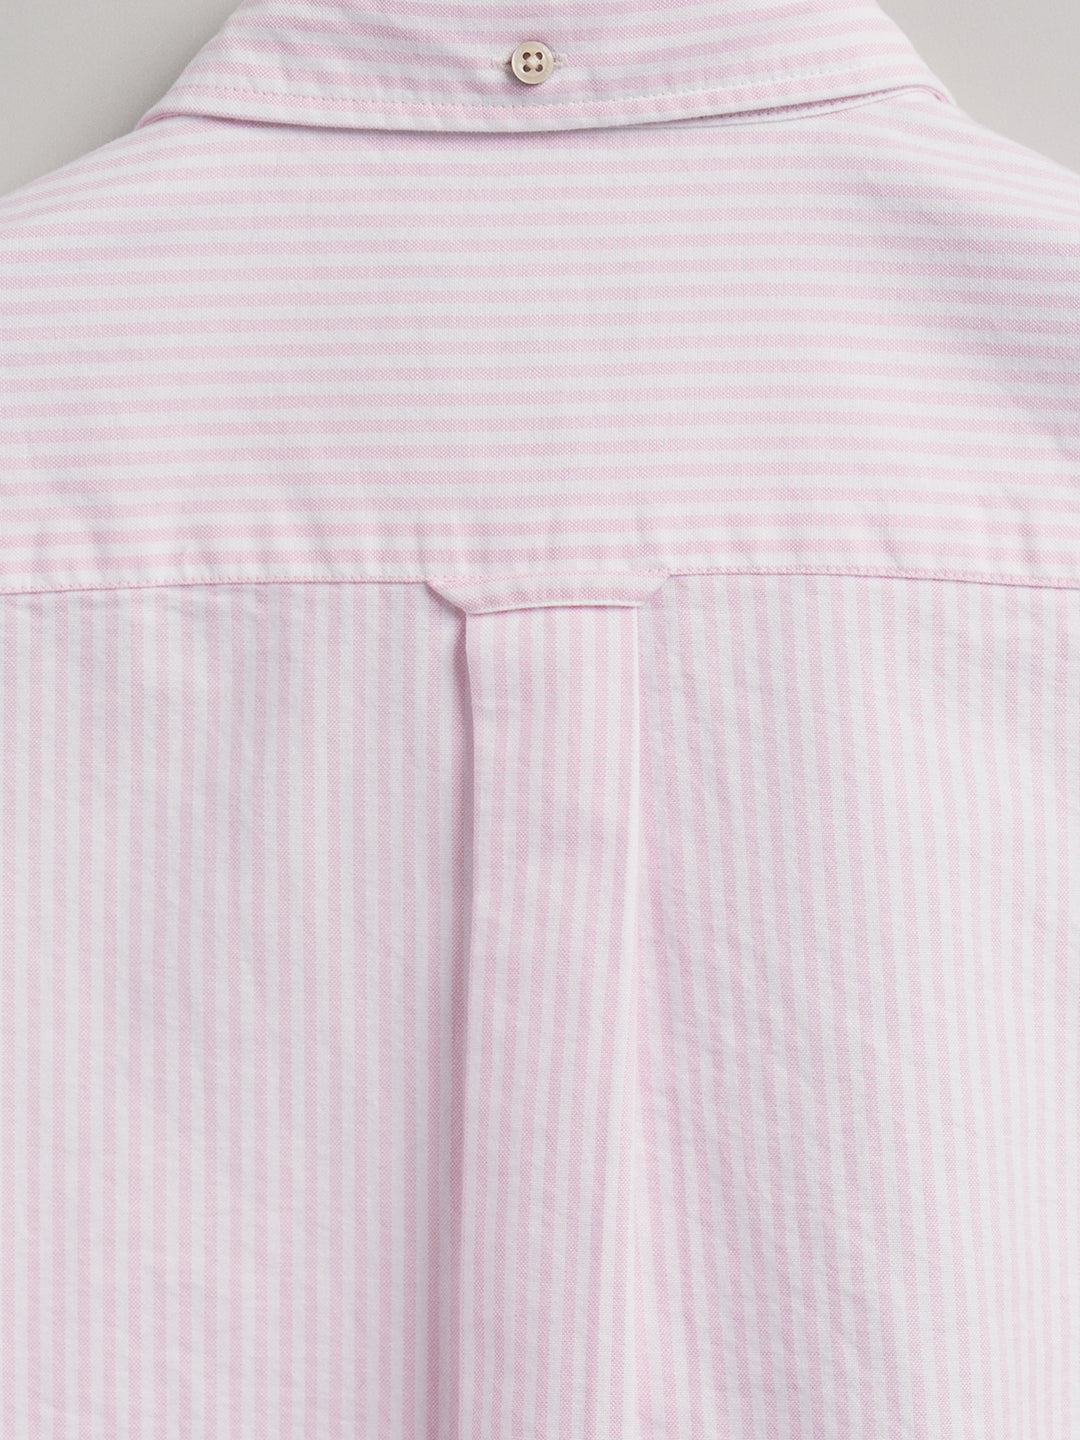 Gant Men Comfort Oxford Cotton Casual Shirt